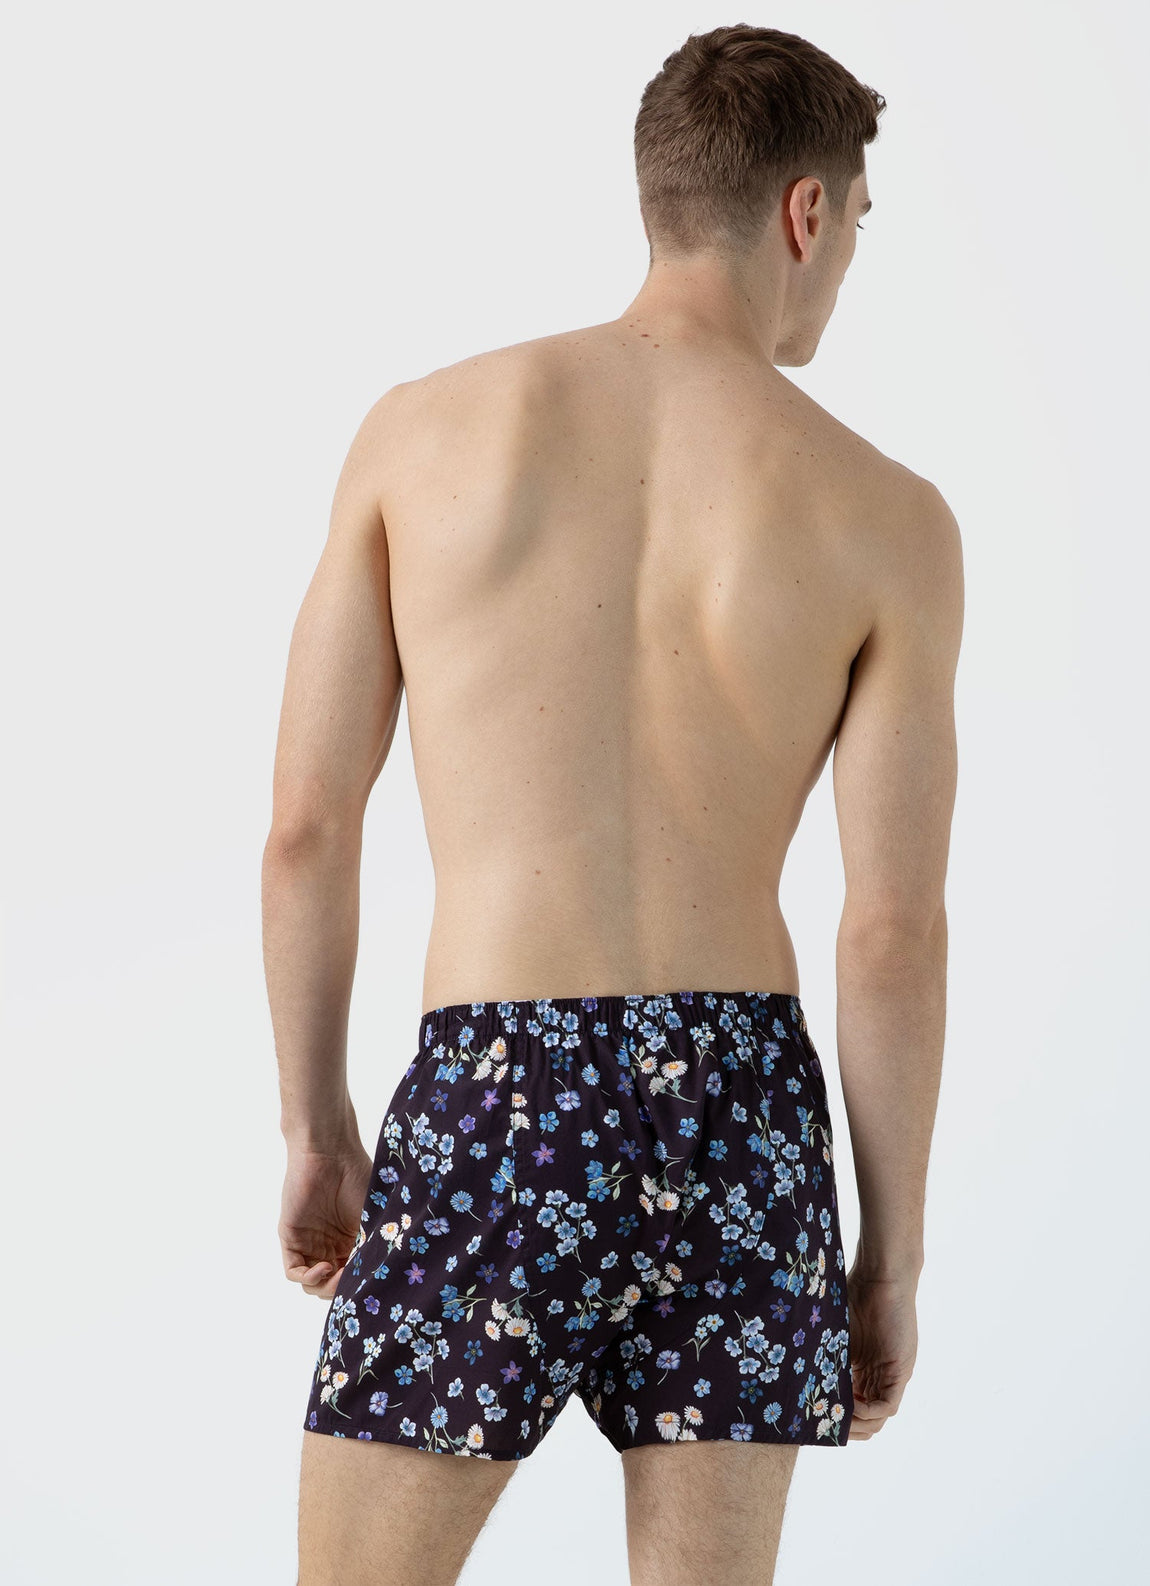 Men's Classic Boxer Shorts in Liberty Fabric Primavera